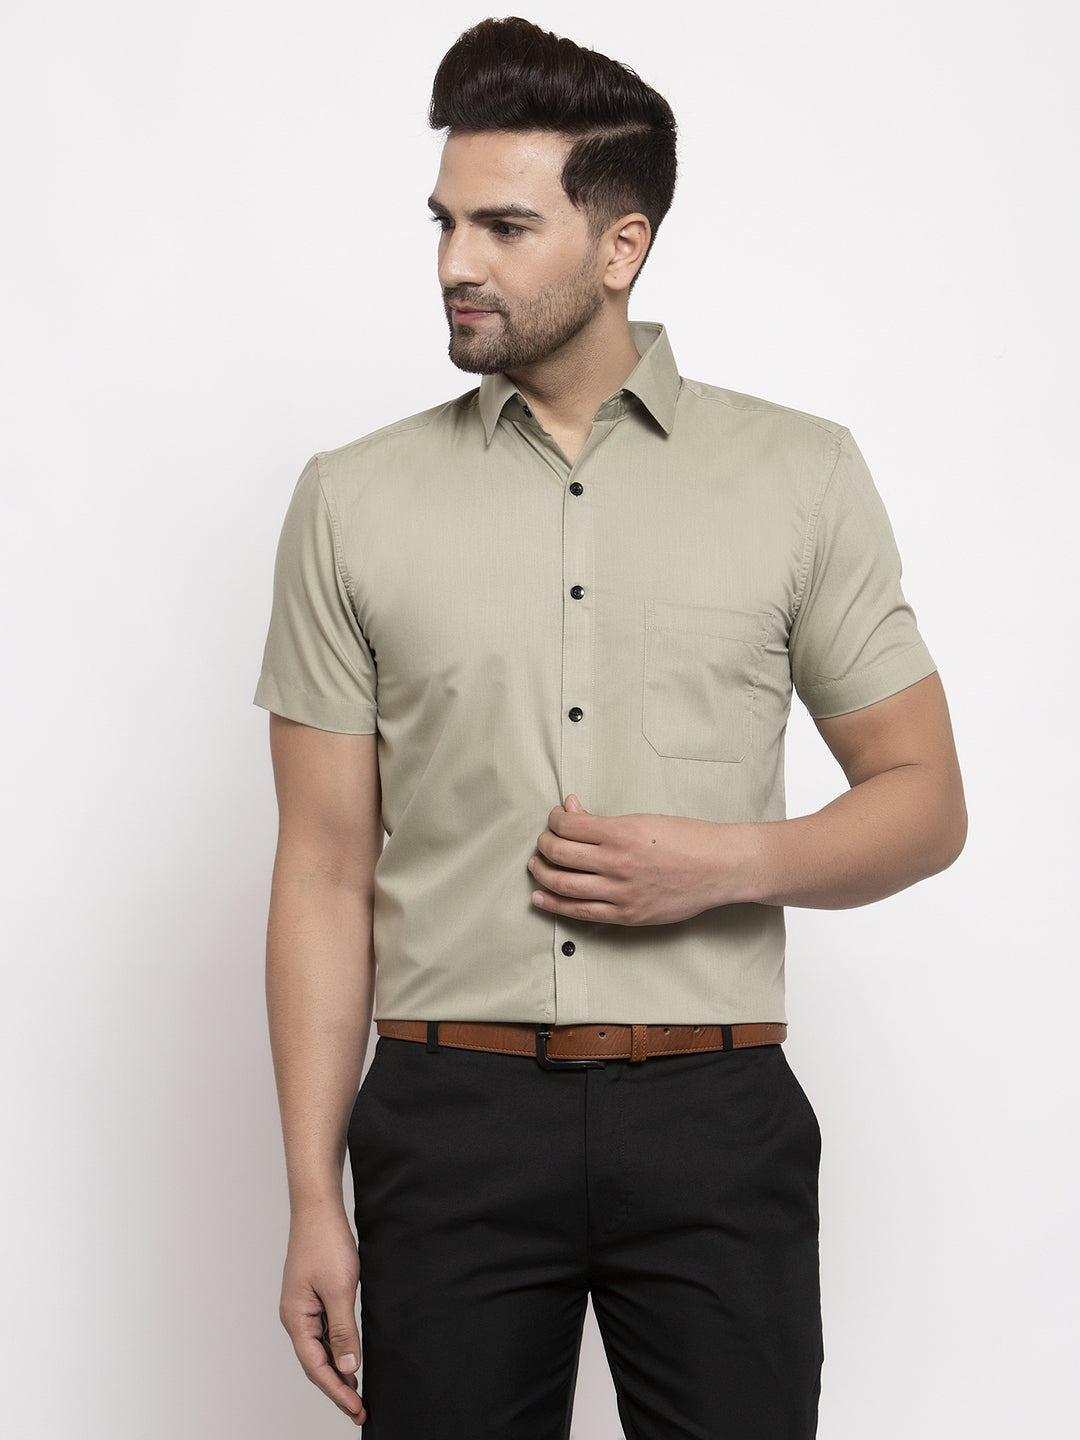 Jainish Green Men's Cotton Half Sleeves Solid Formal Shirts